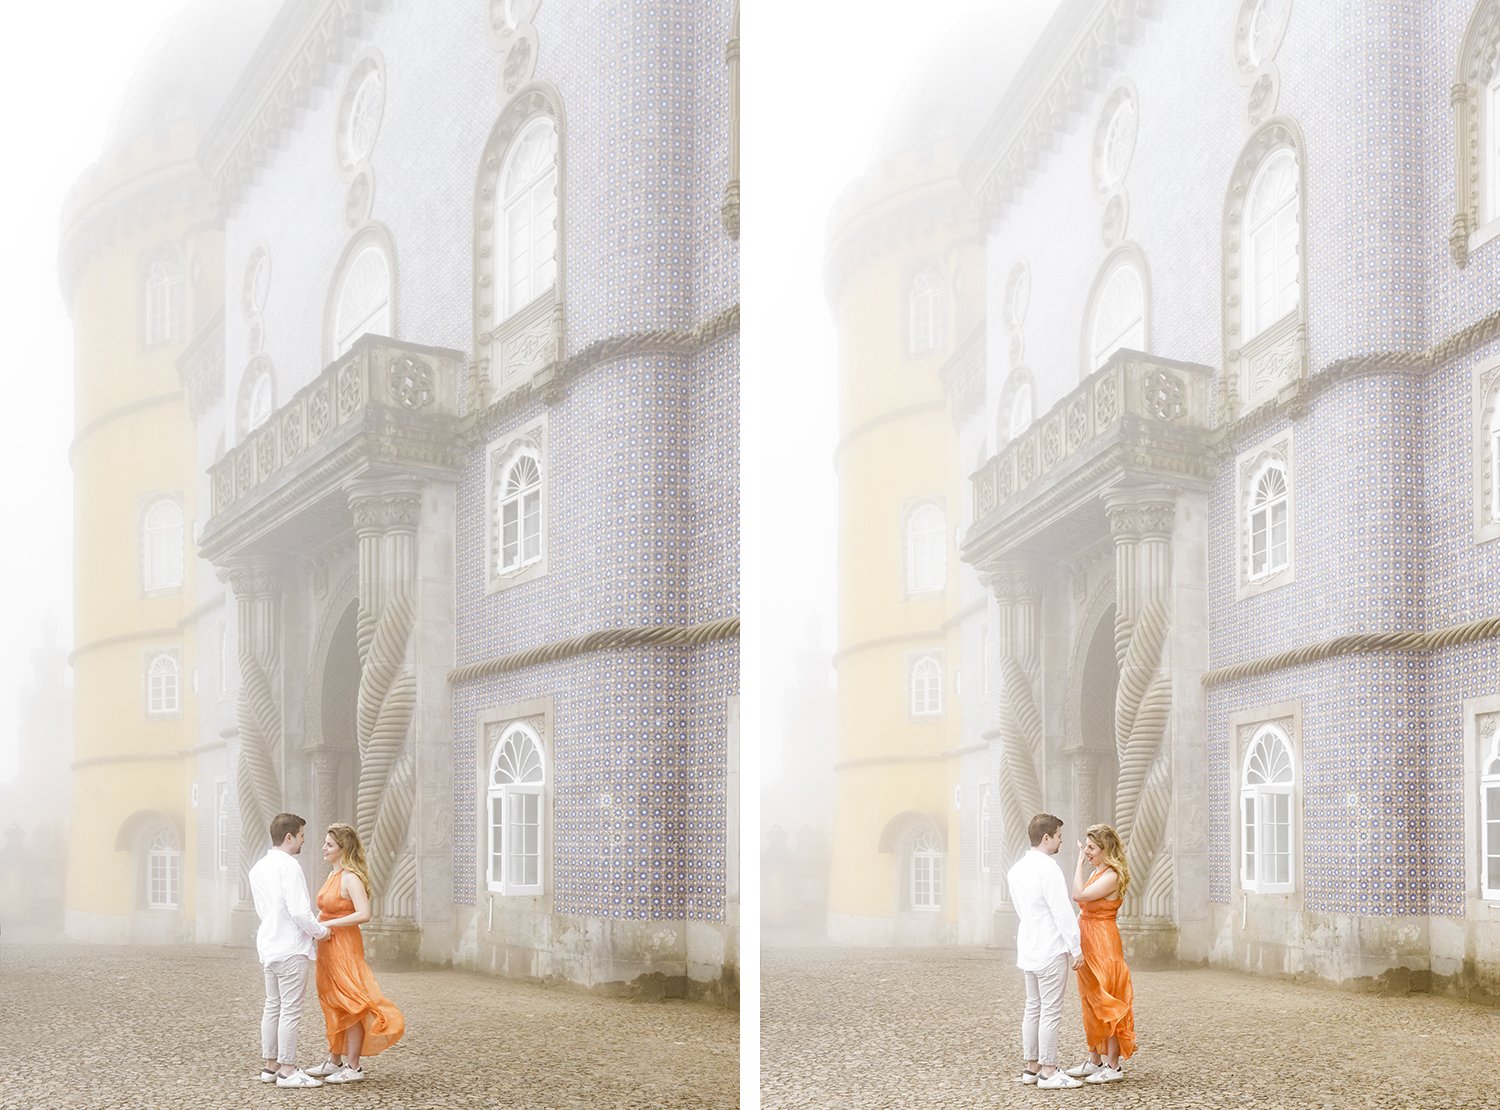 pena-palace-sintra-surprise-wedding-proposal-photographer-ana-lucia-terra-fotografia-3.jpg